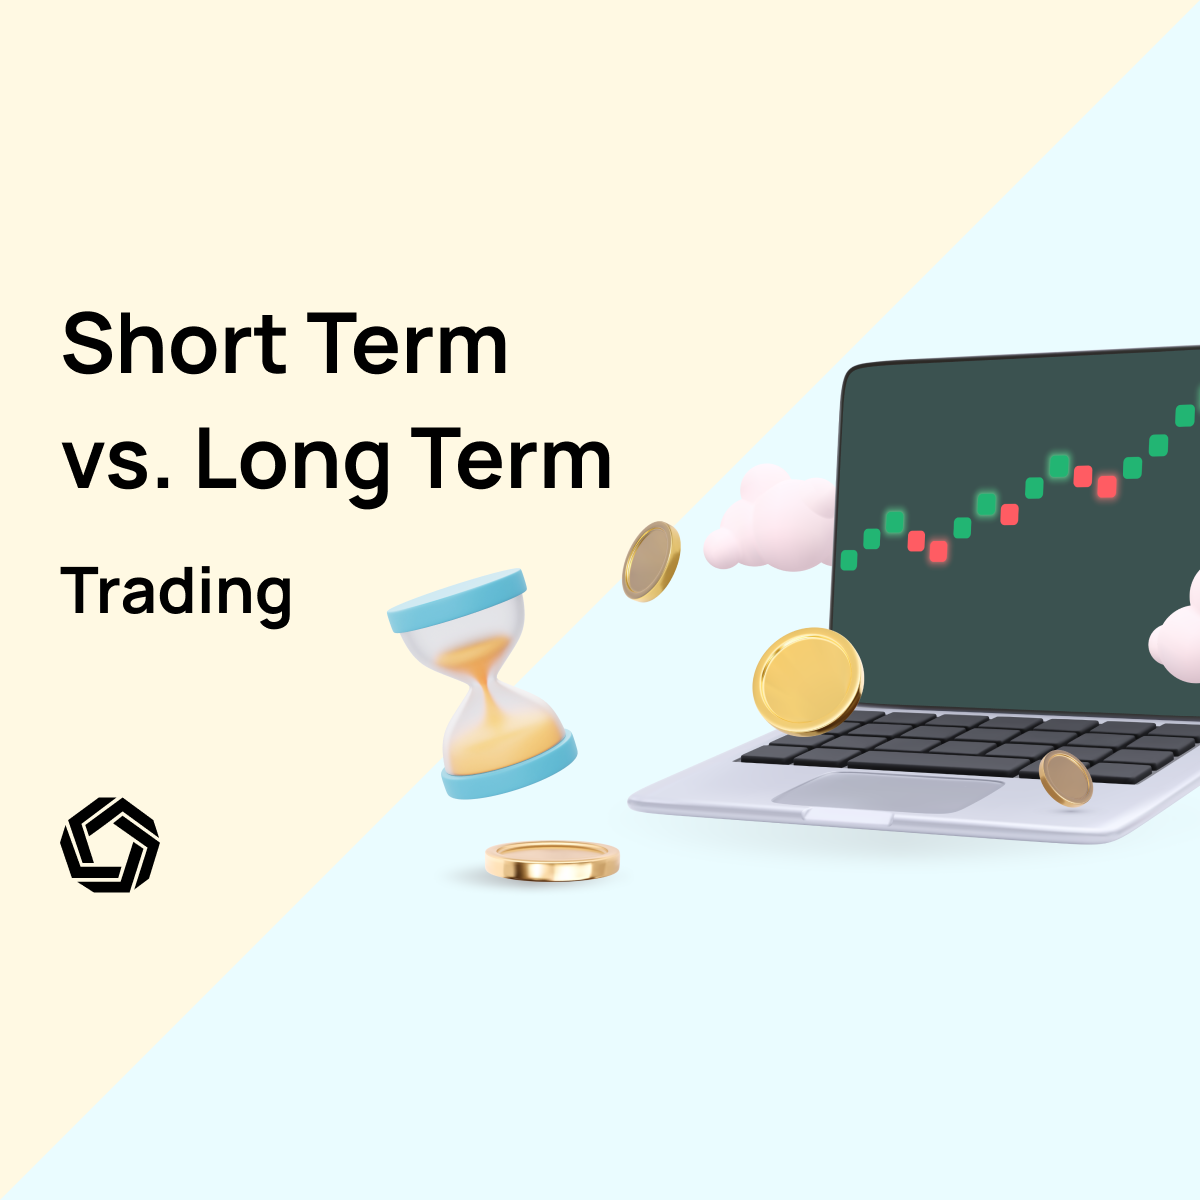 Short Term vs. Long Term Trading